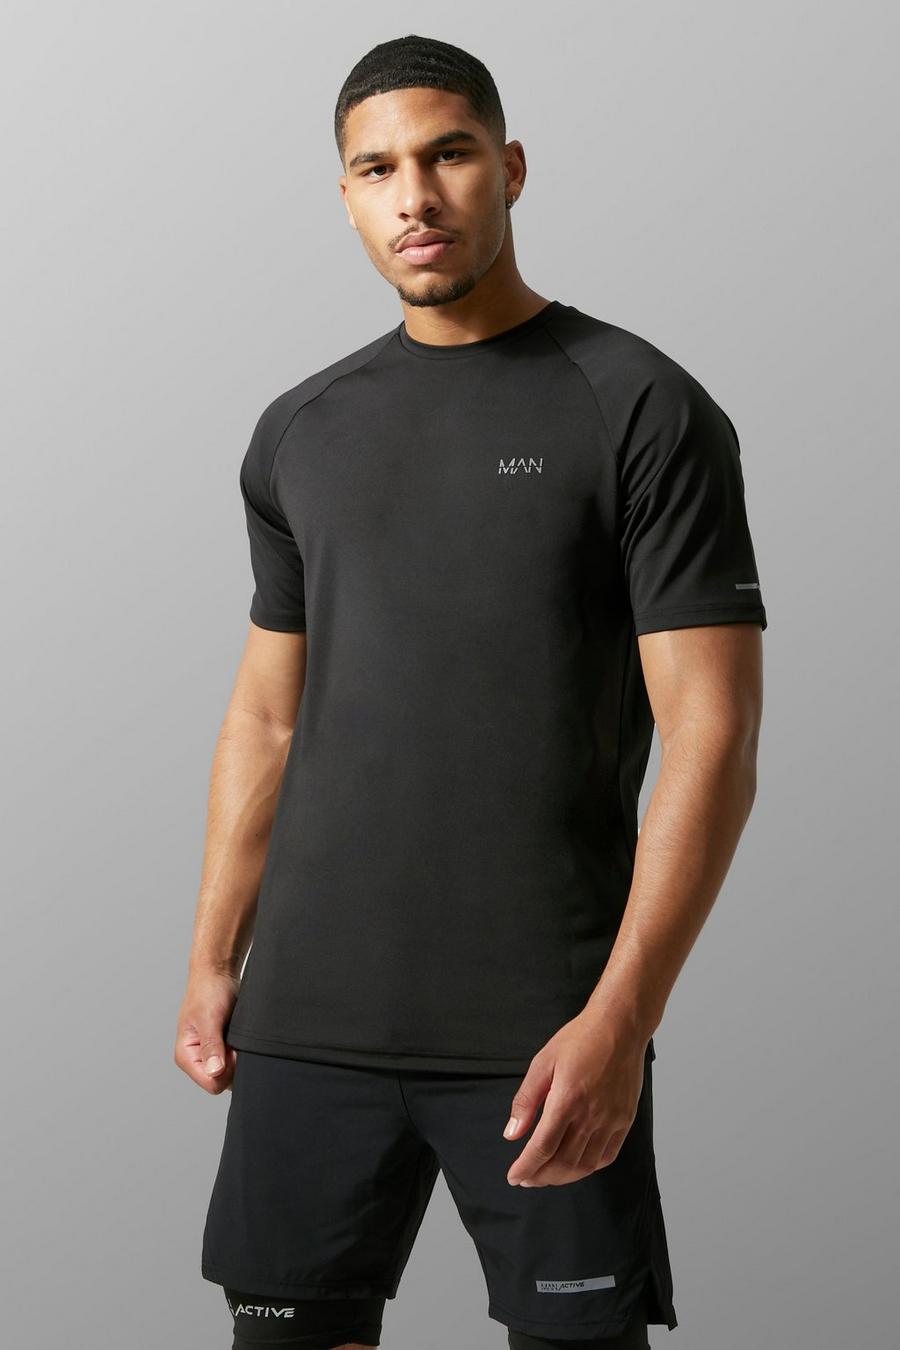 Planet Fitness Thumbs Up Men's Black Graphic T-Shirt, Men's